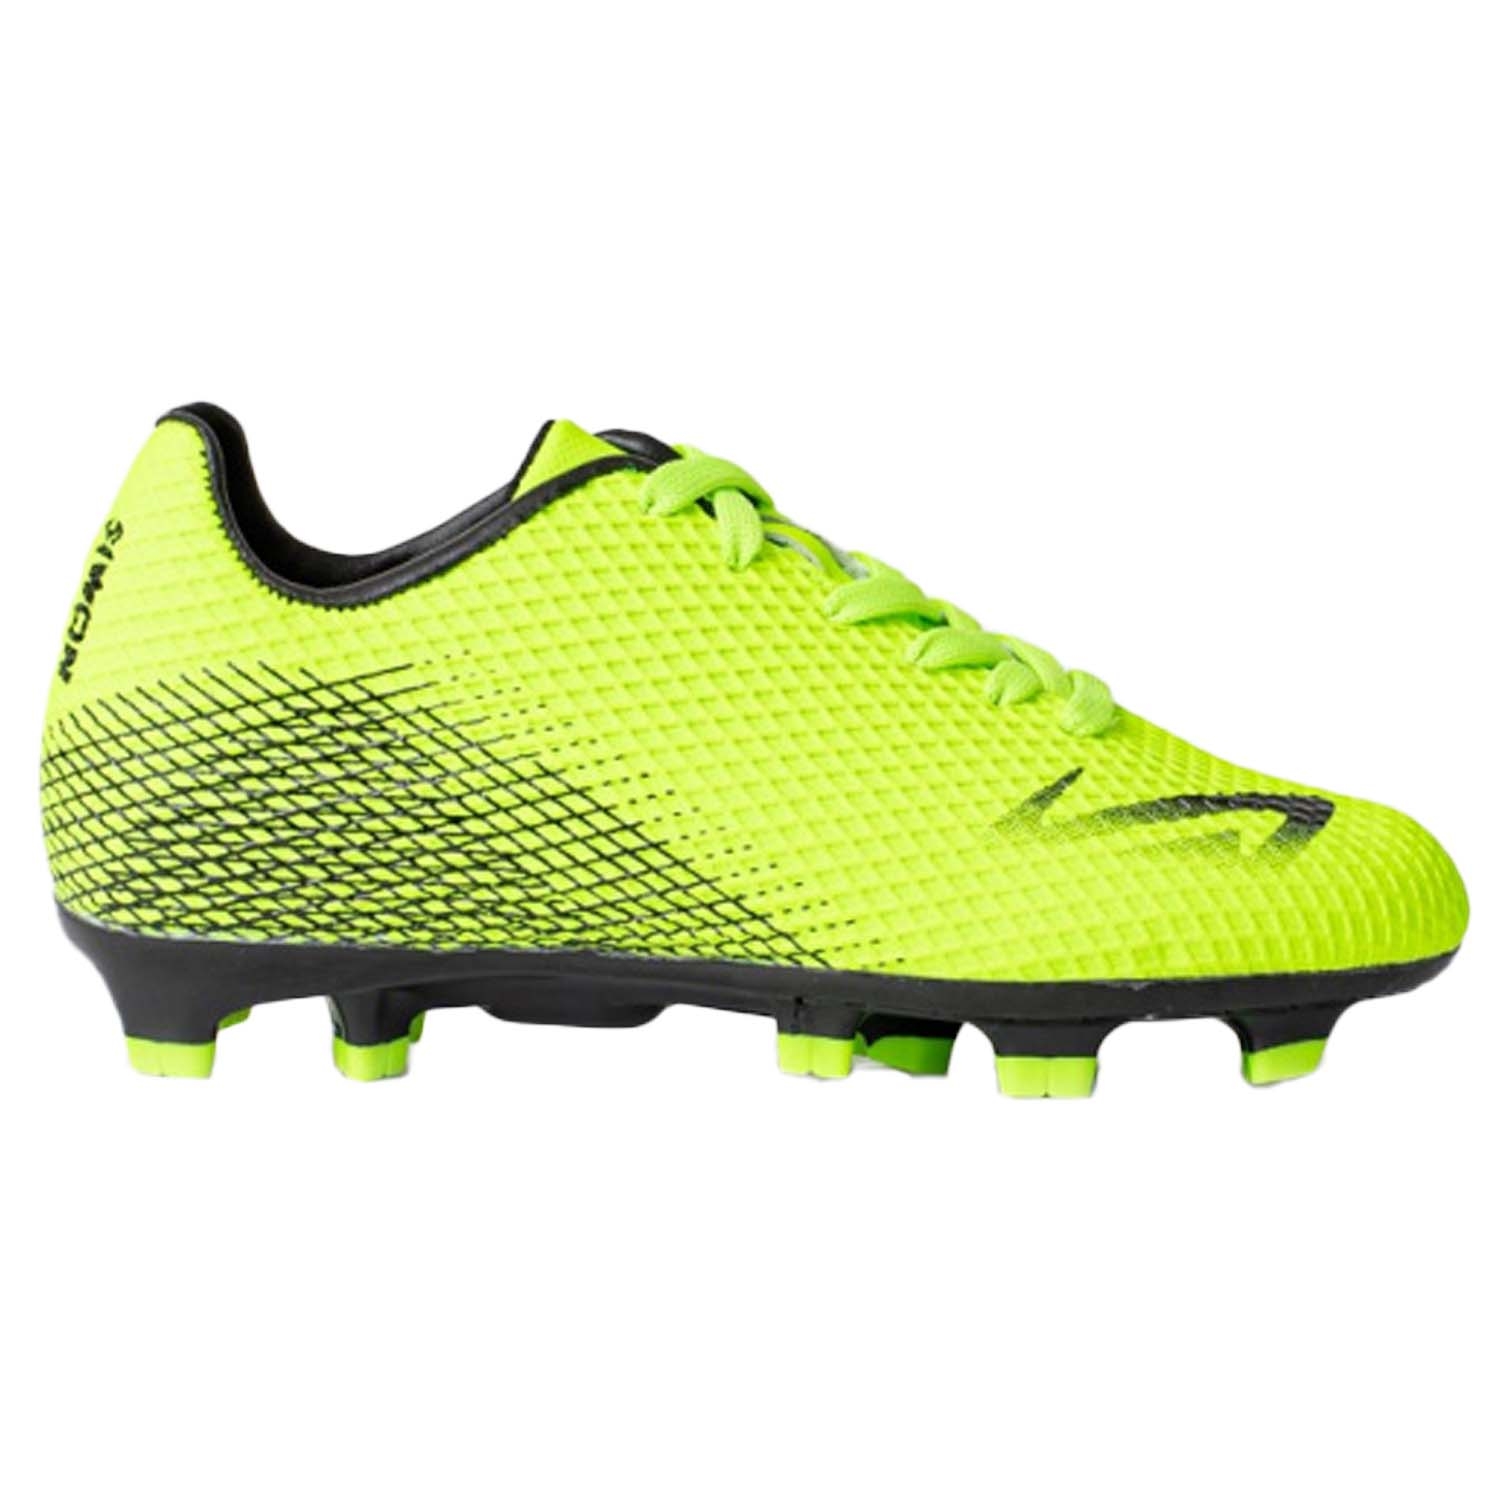 Nomis JNR Magnet FG Football Boots: Fluro Lime/Black | Mike Pawley Sports